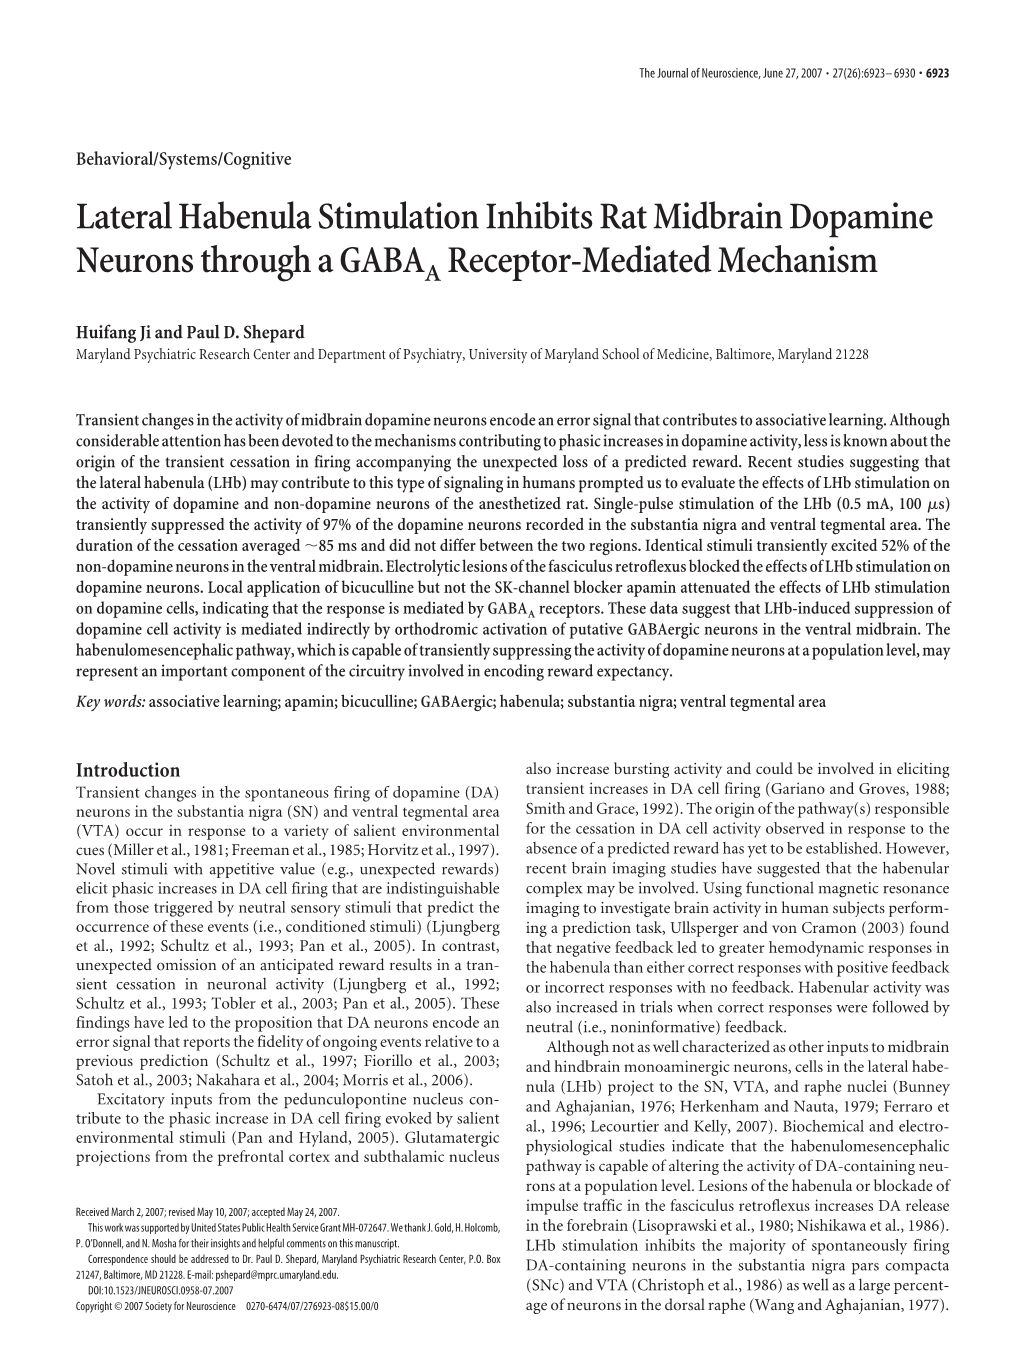 Lateral Habenula Stimulation Inhibits Rat Midbrain Dopamine Neurons